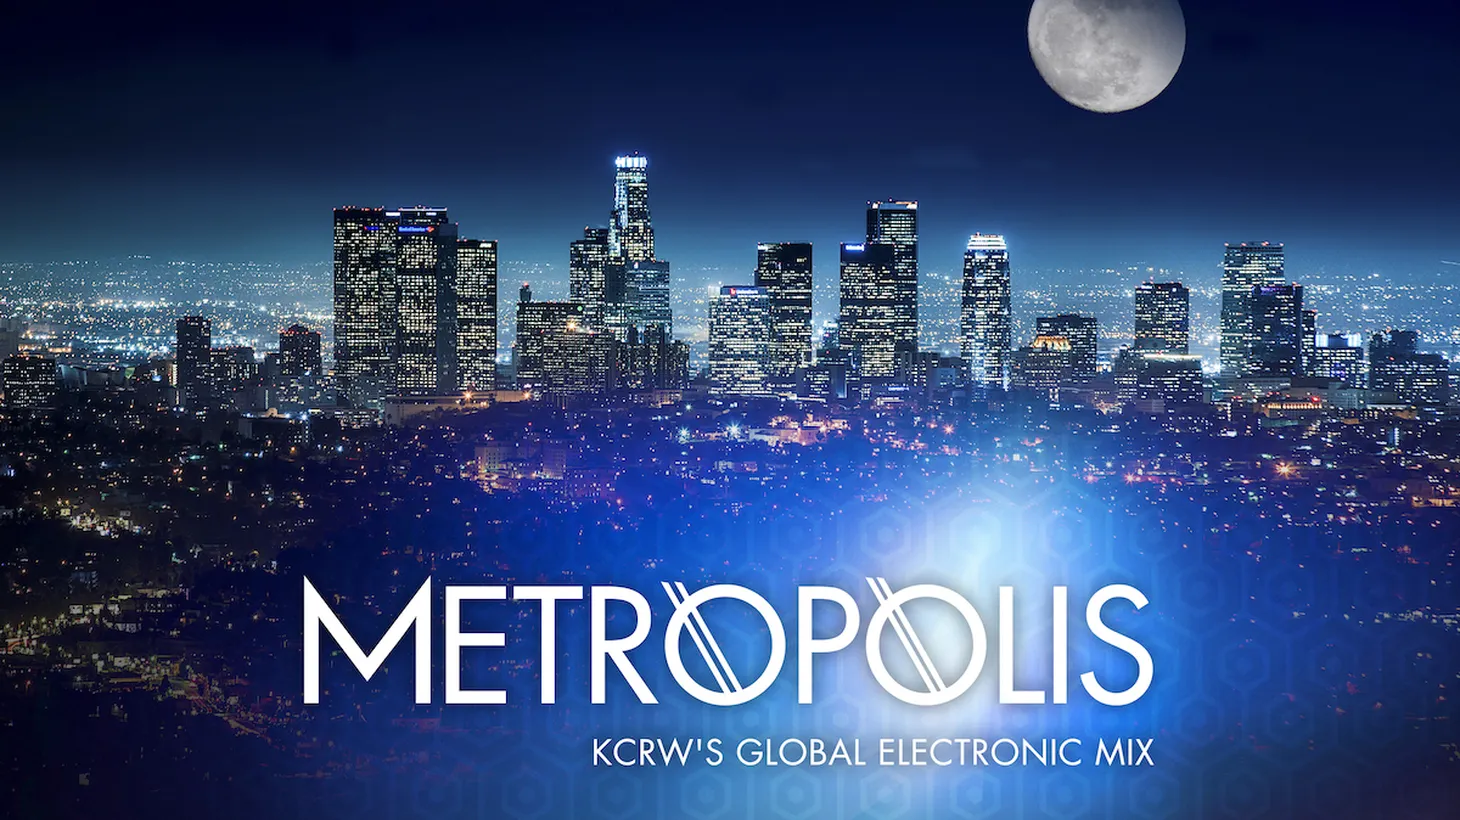 Metropolis playlist, March 27, 2021.